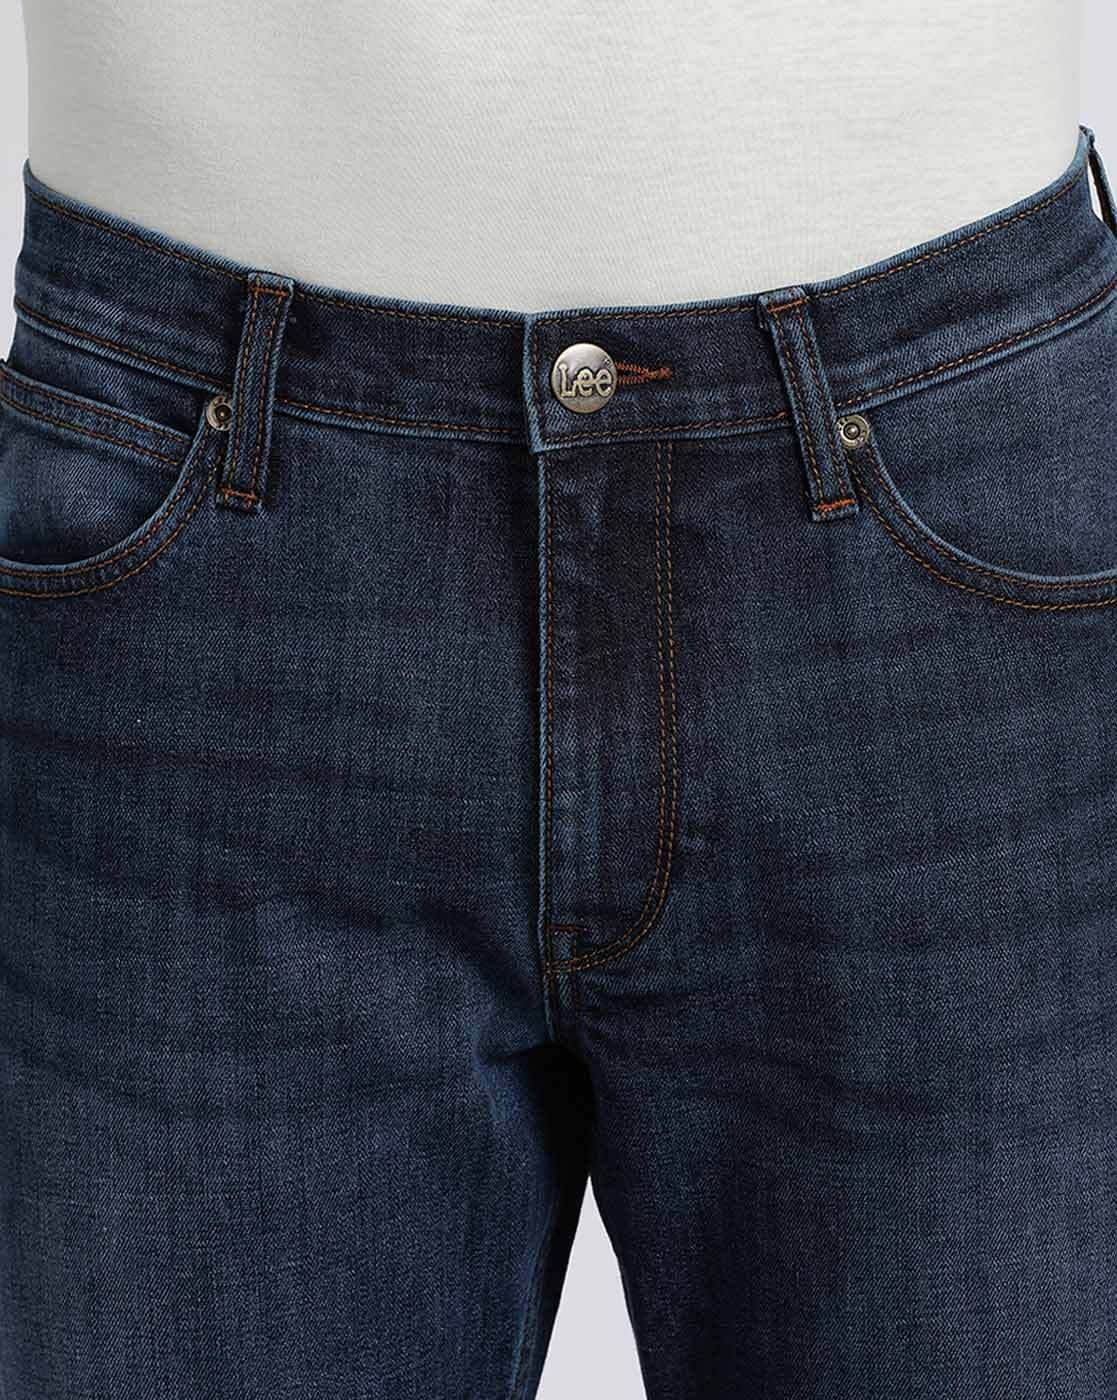 Japanese Repro Denim Jeans, Lee Brand, Selvedge Denim Jeans, 1 - 32